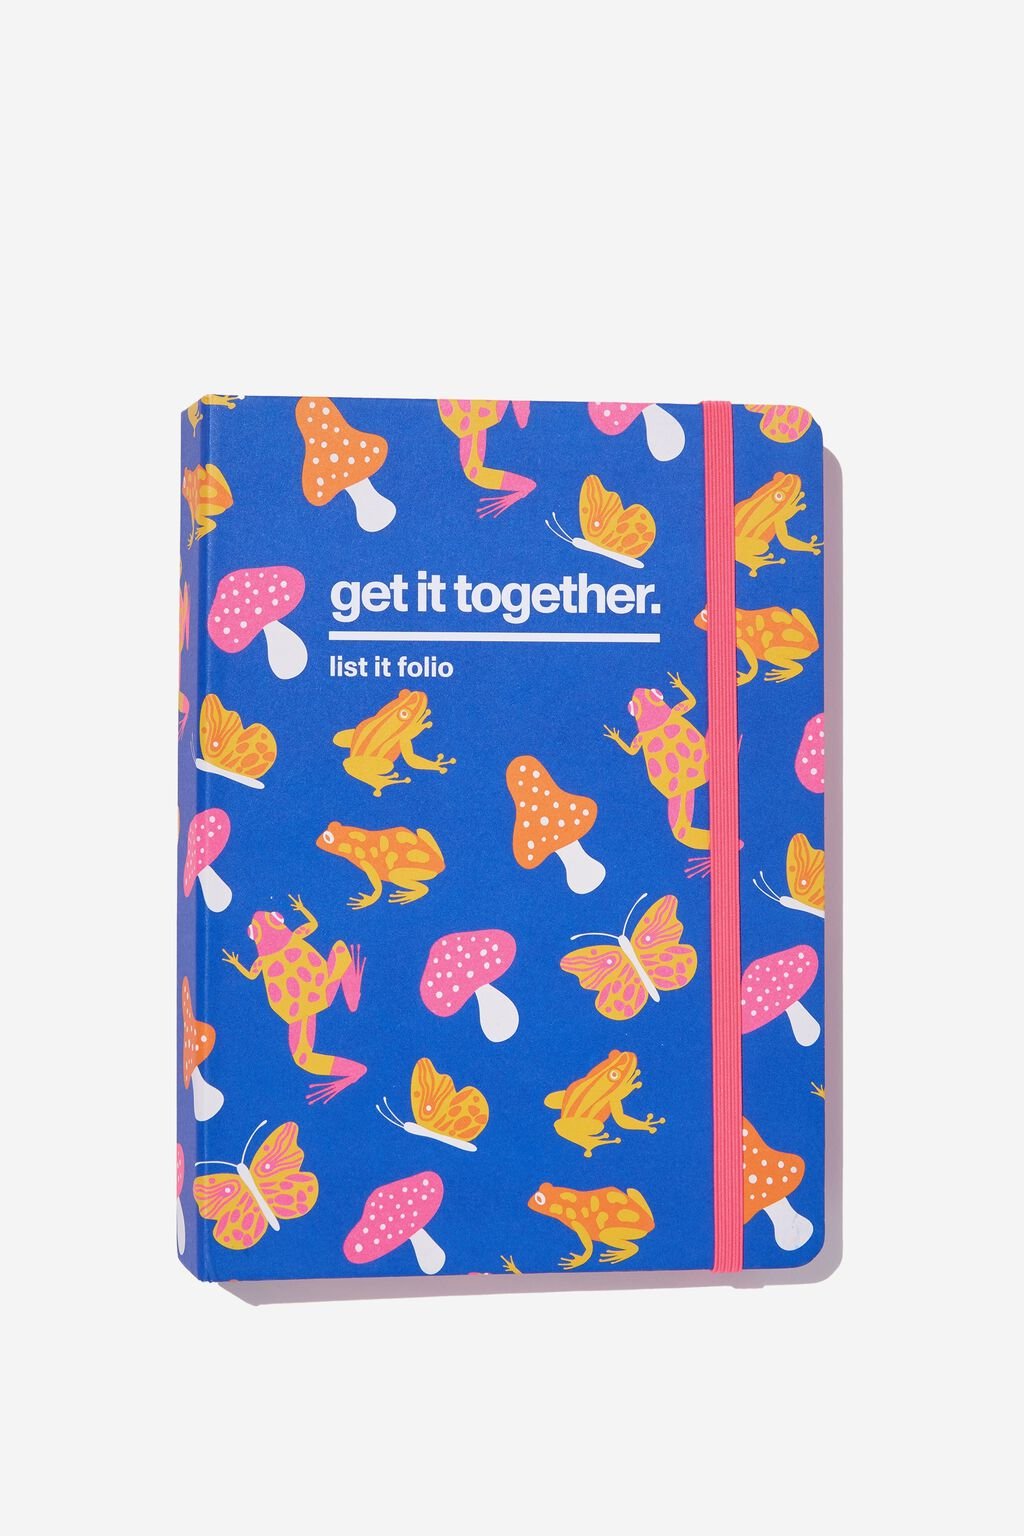 List It Folio - Get It Together